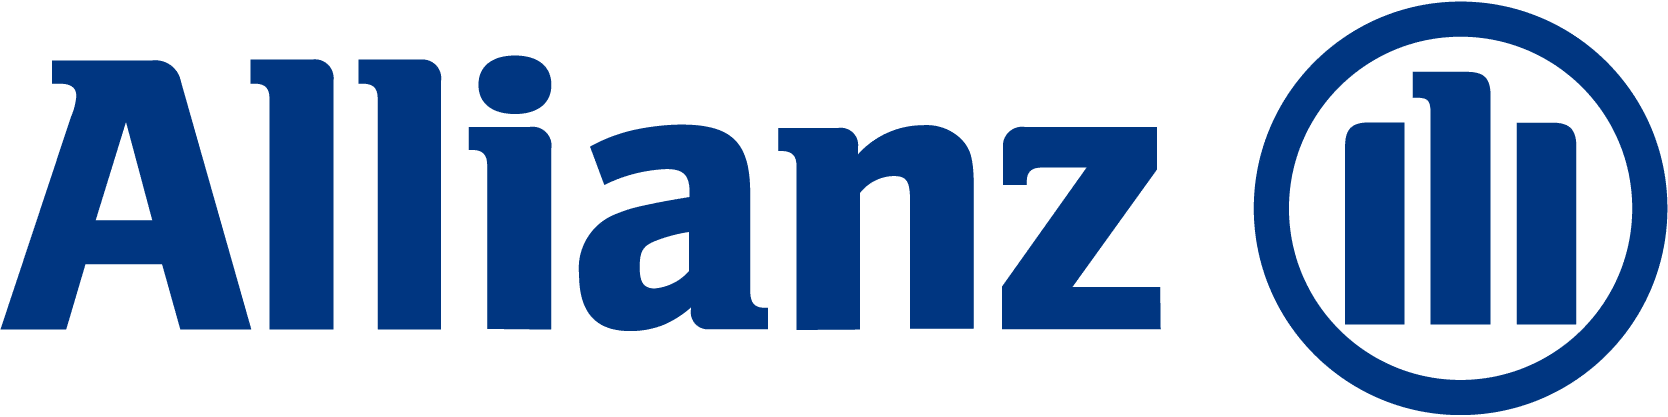 Allianz Logo farbig Kundenreferenz Avsar Test Engineering